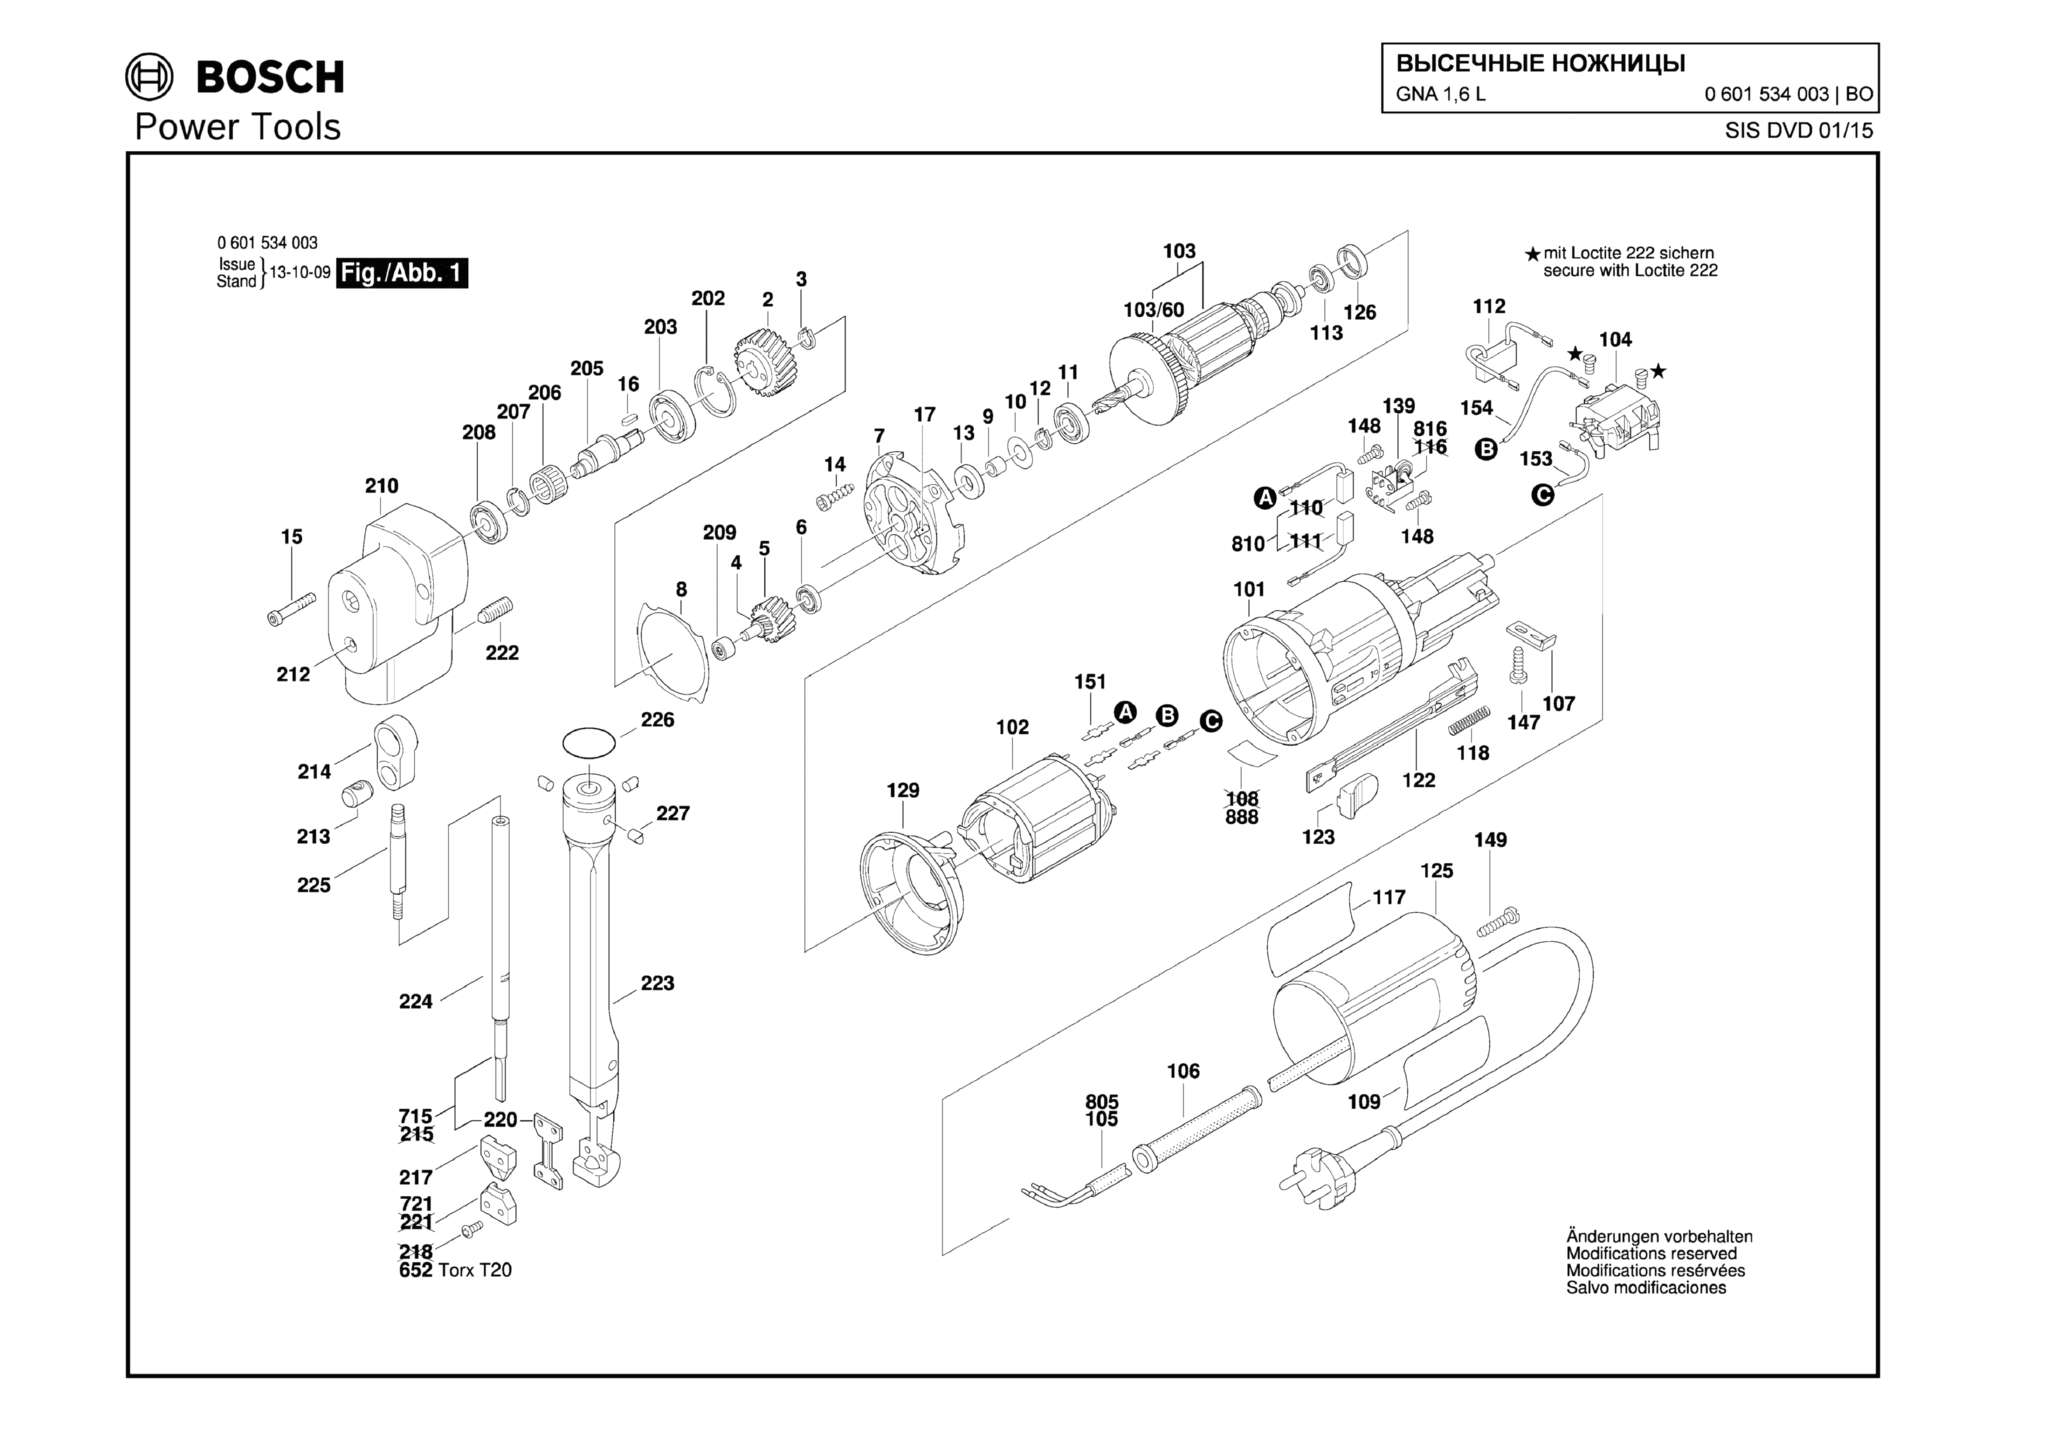 Запчасти, схема и деталировка Bosch GNA 1,6 L (ТИП 0601534003)